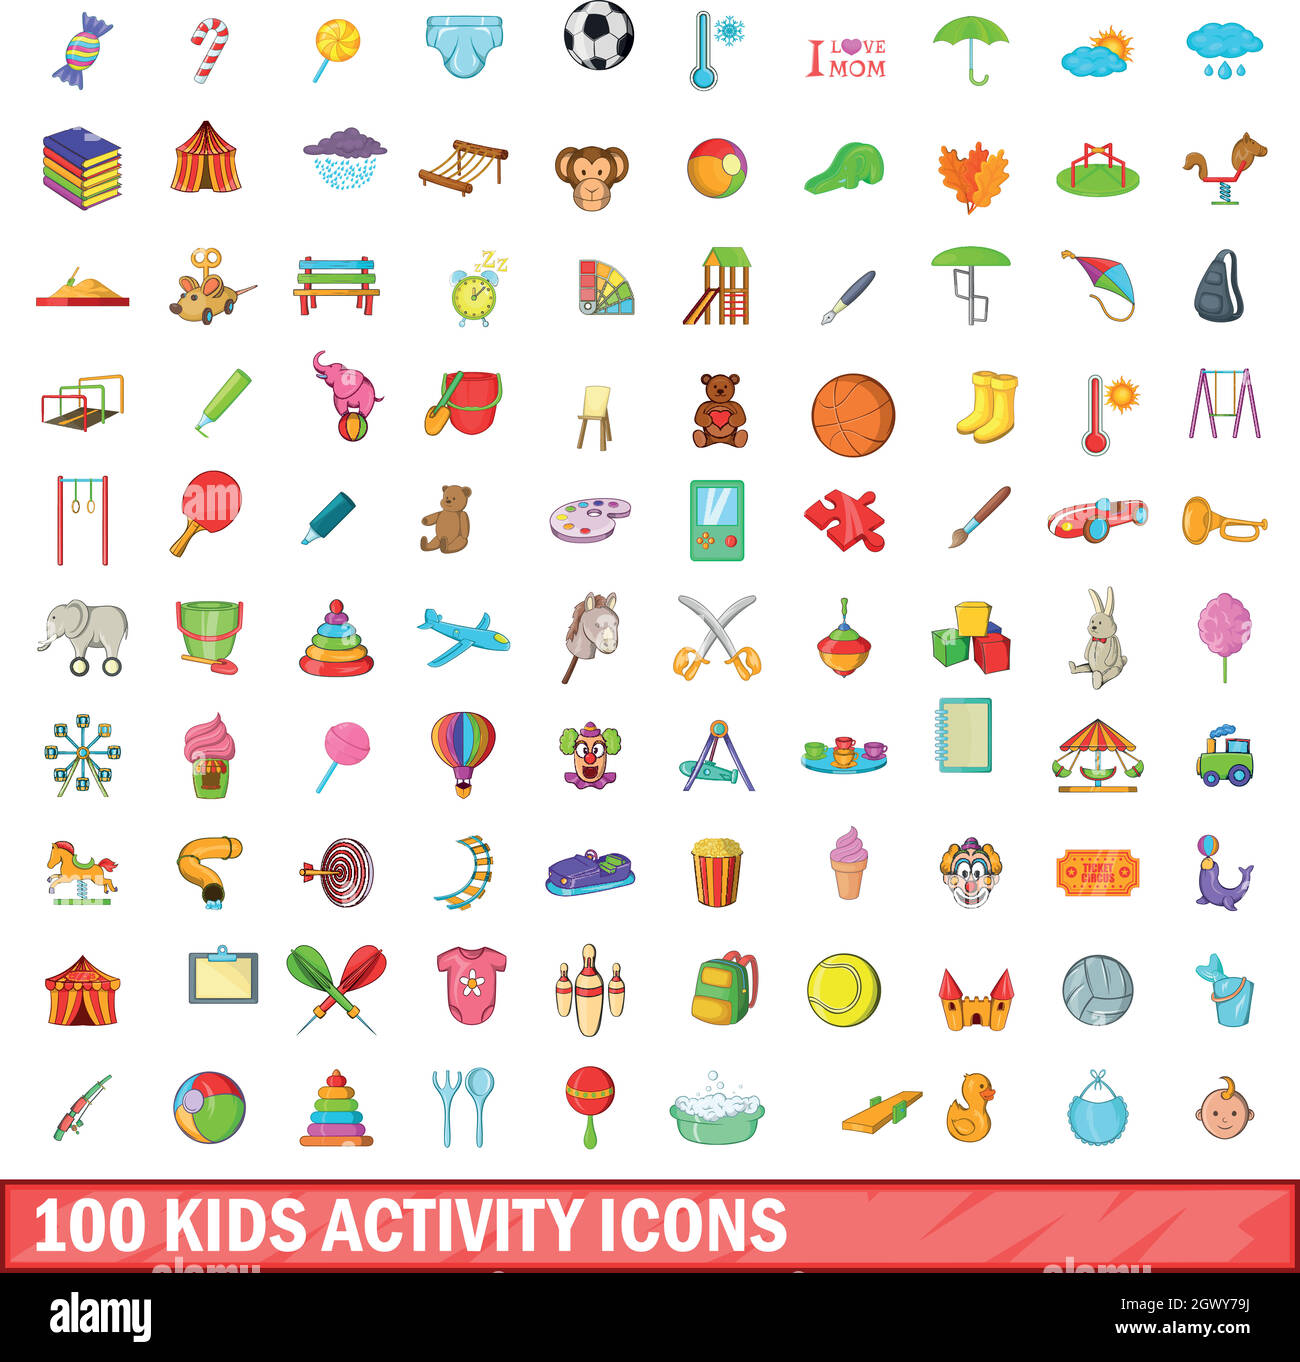 100 kids activity icons set, cartoon style Stock Vector